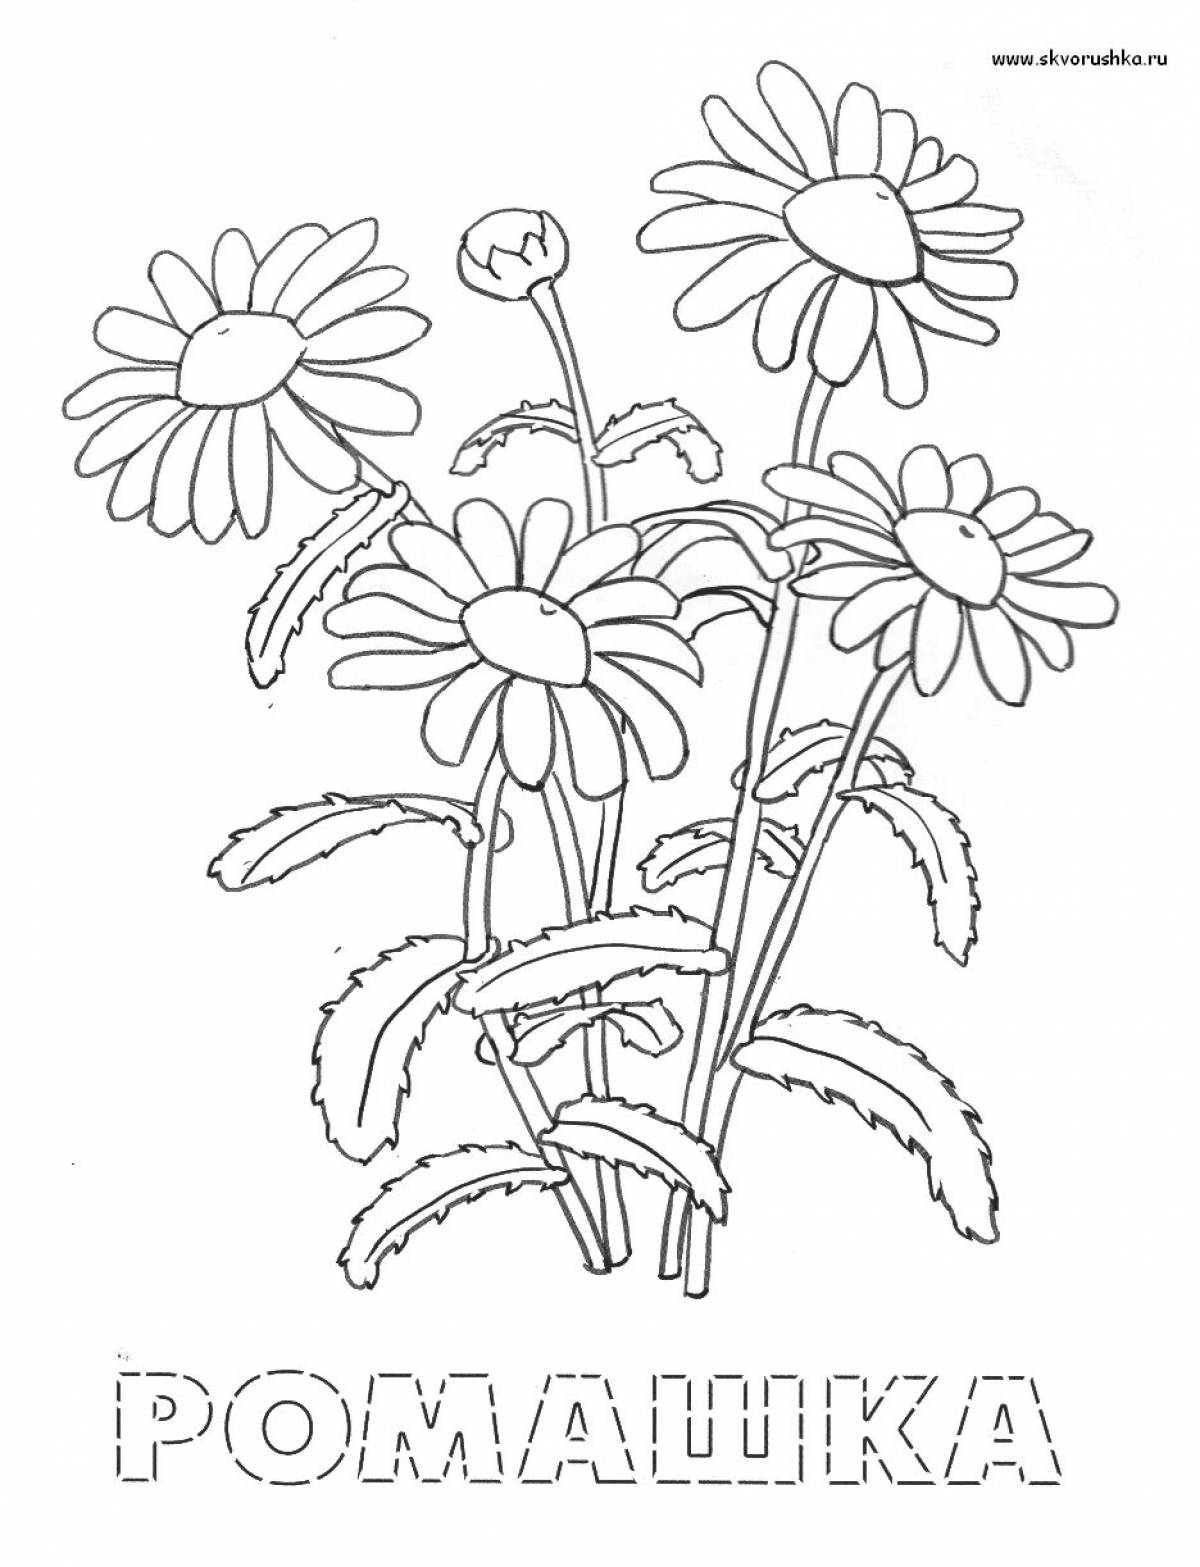 Authentic medicinal plants coloring book for preschoolers